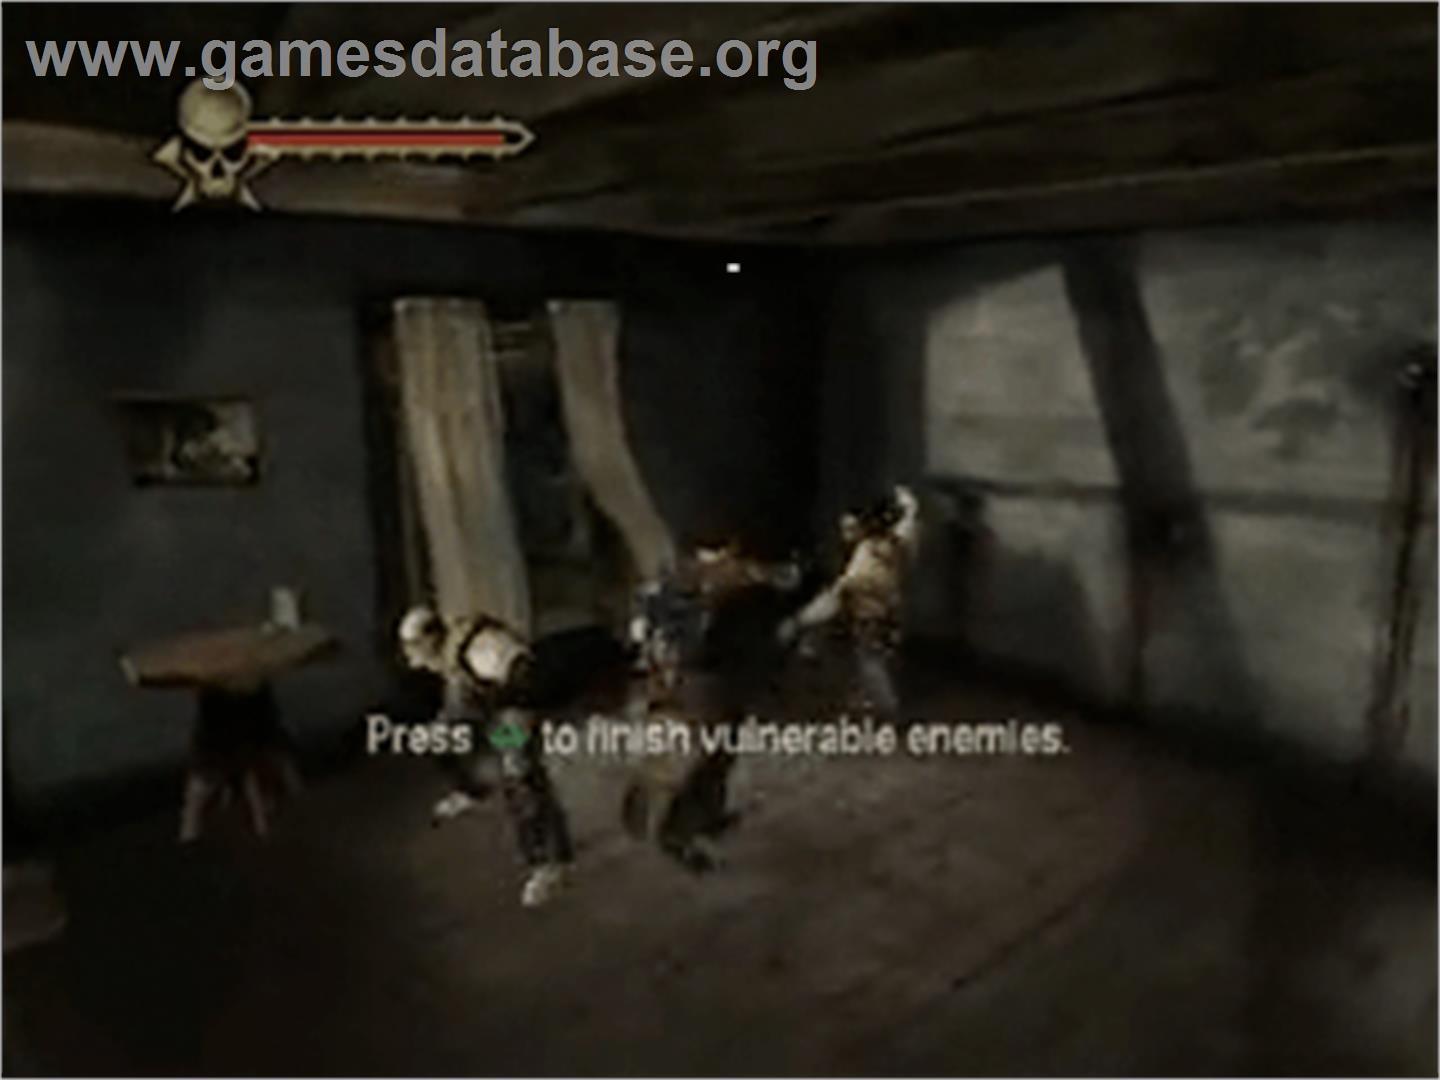 Evil Dead: Regeneration - Sony Playstation 2 - Artwork - In Game